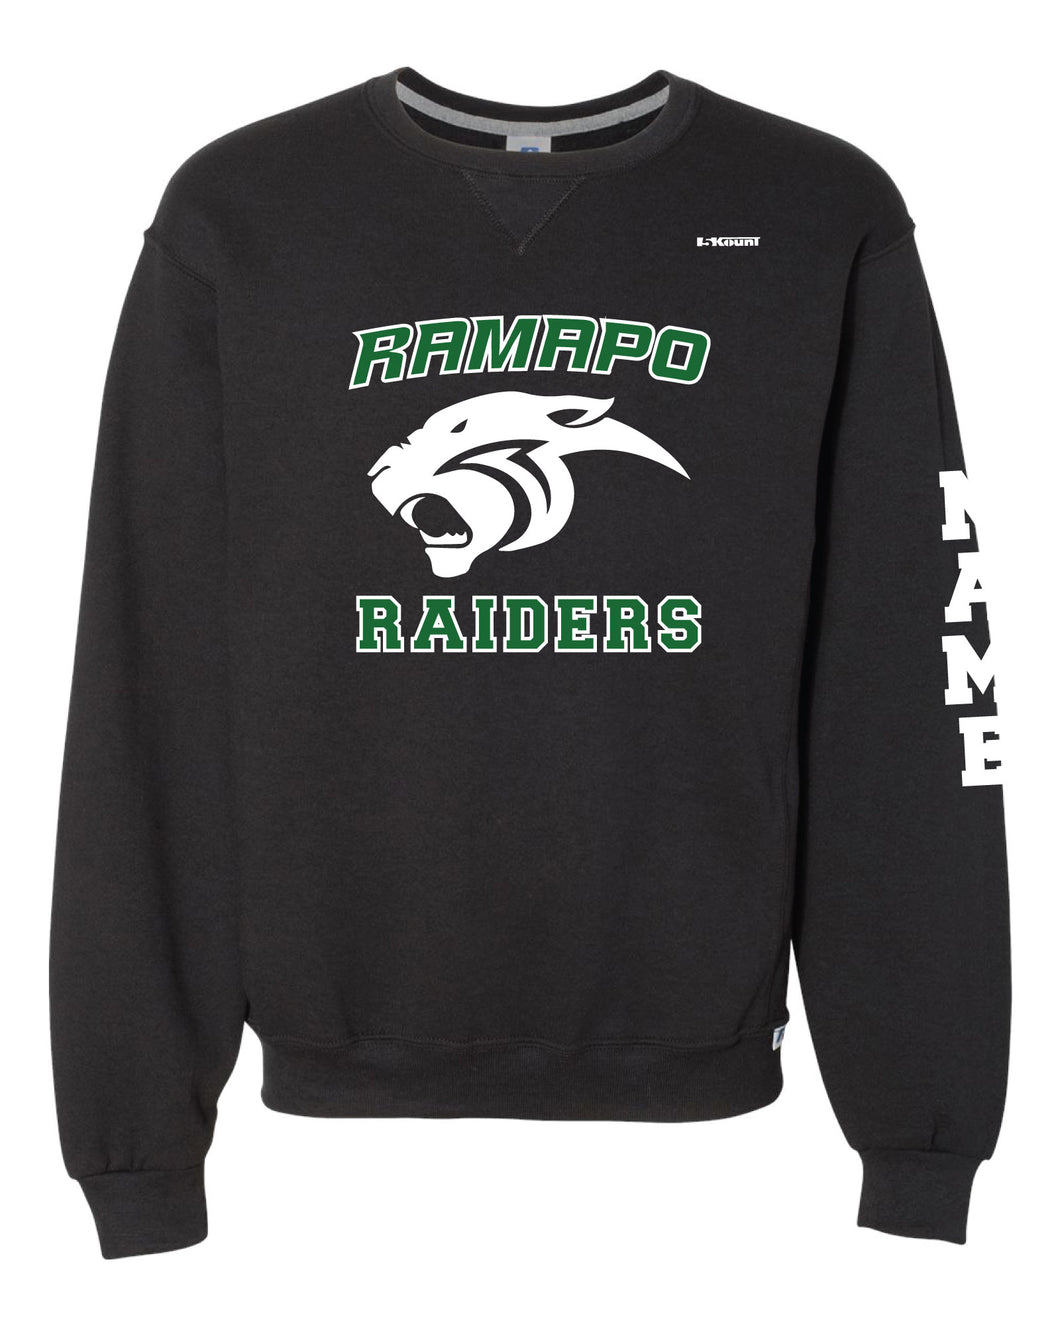 Ramapo Raiders Russell Athletic Cotton Crewneck Sweatshirt - Black - 5KounT2018